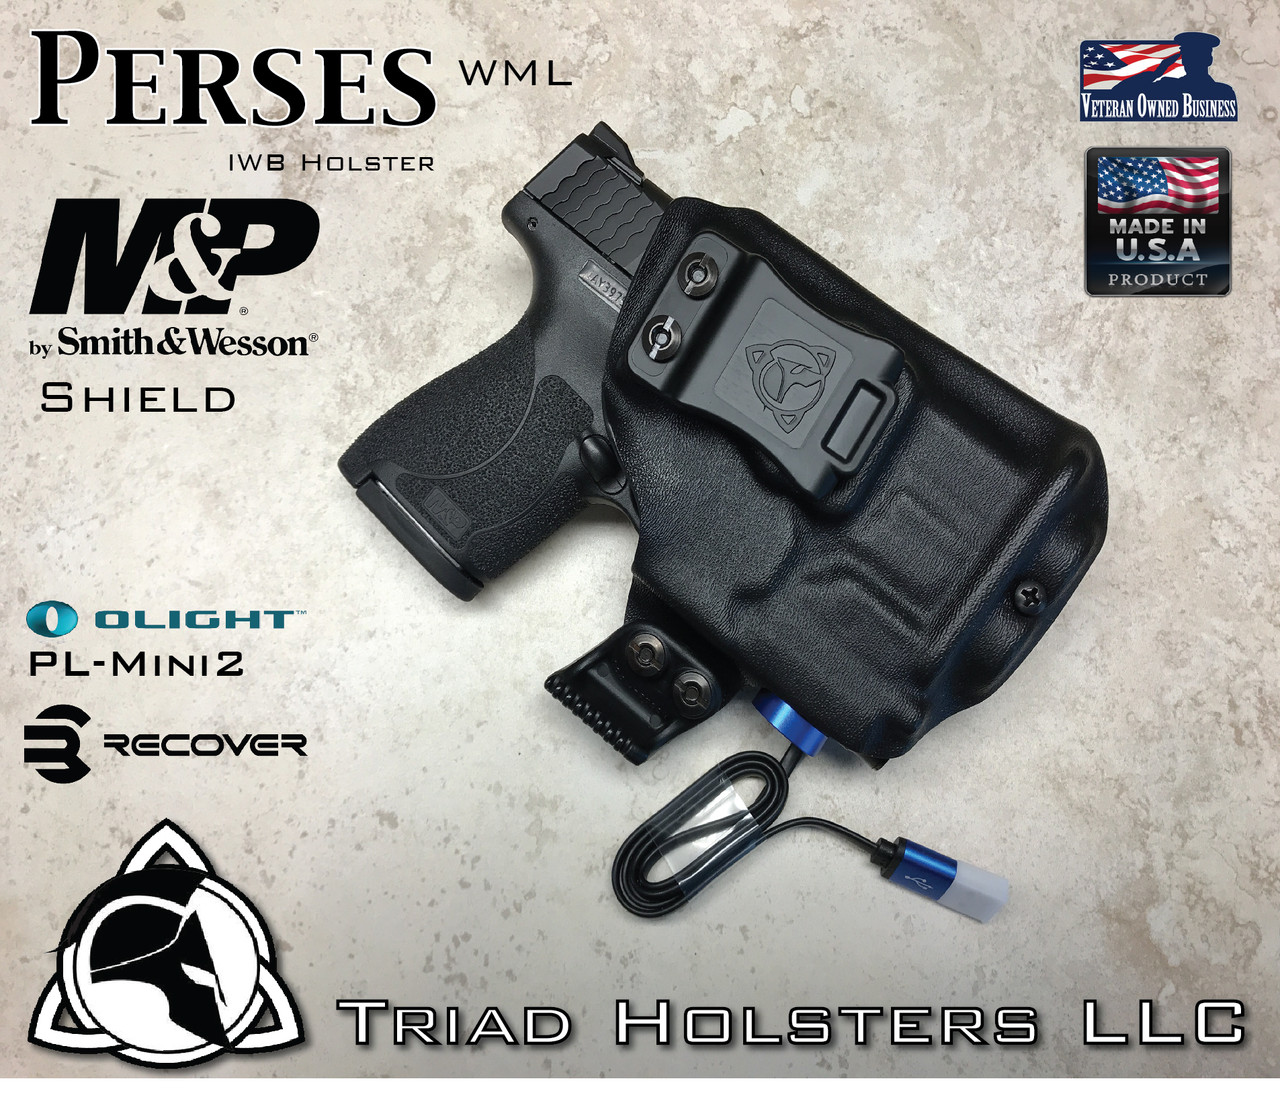 Burly Man Tactical OWB Kydex holster Fits M&P 2.0 Handguns With Light Kydex 